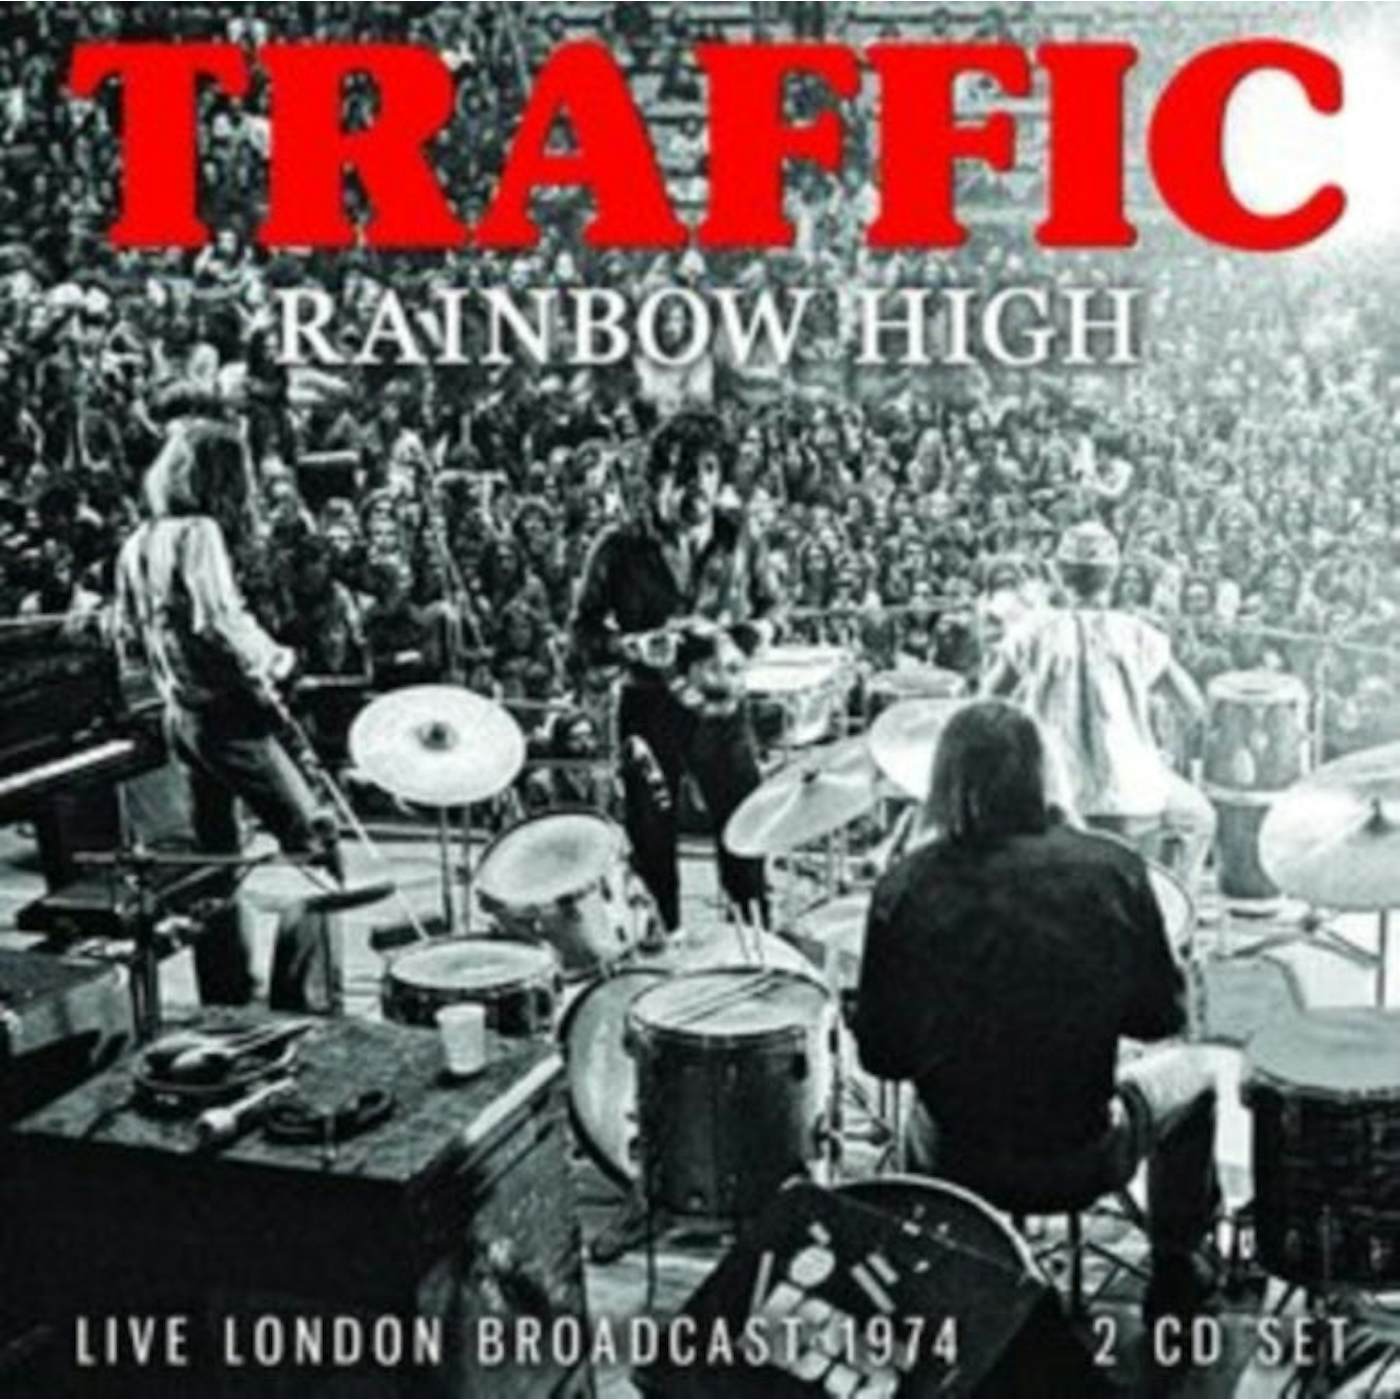 Traffic CD - Rainbow High (2cd)